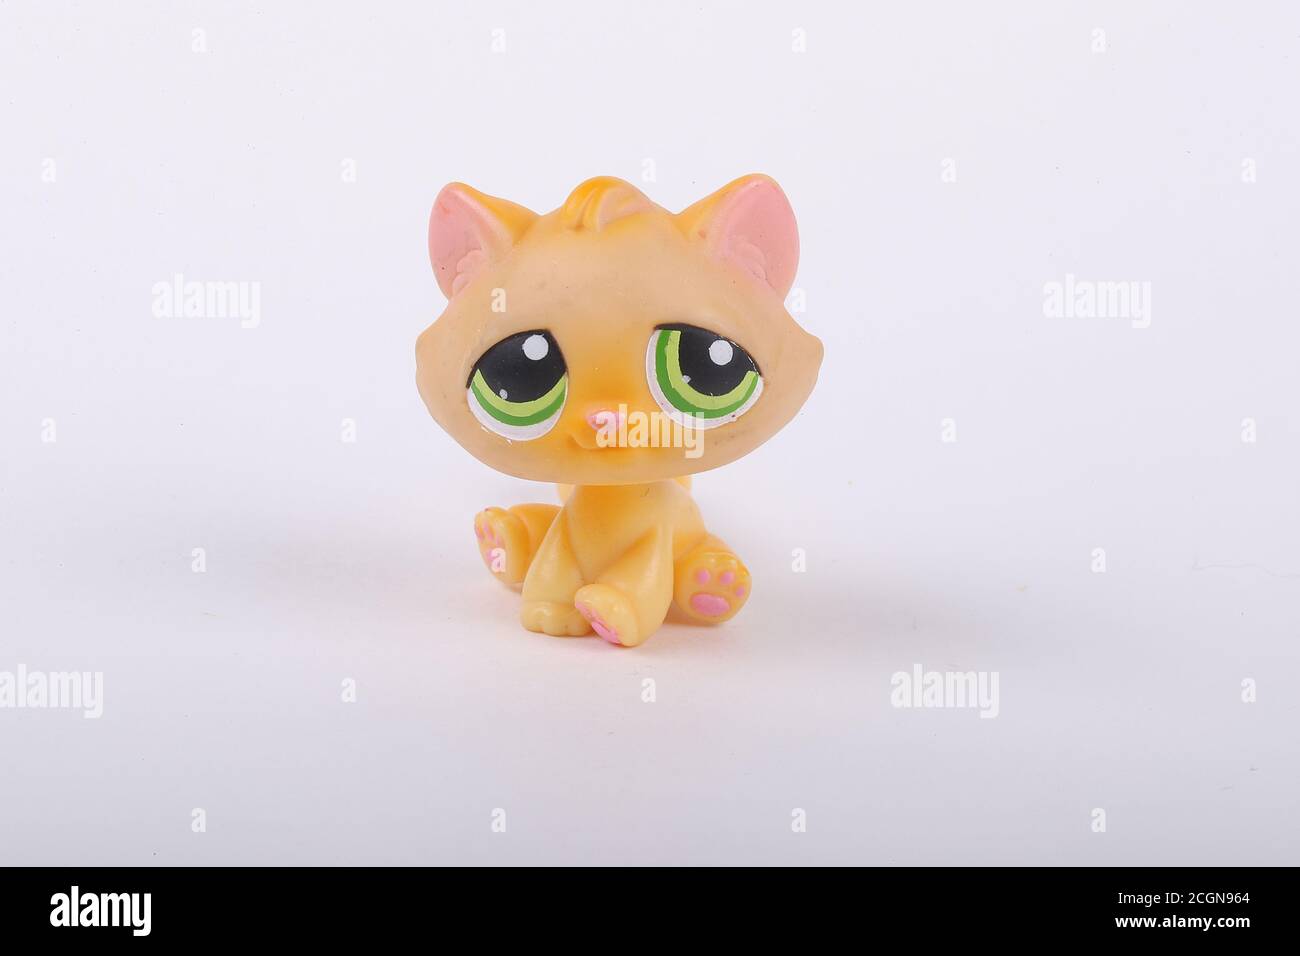 Littlest pet shop fotografías e imágenes de alta resolución - Alamy